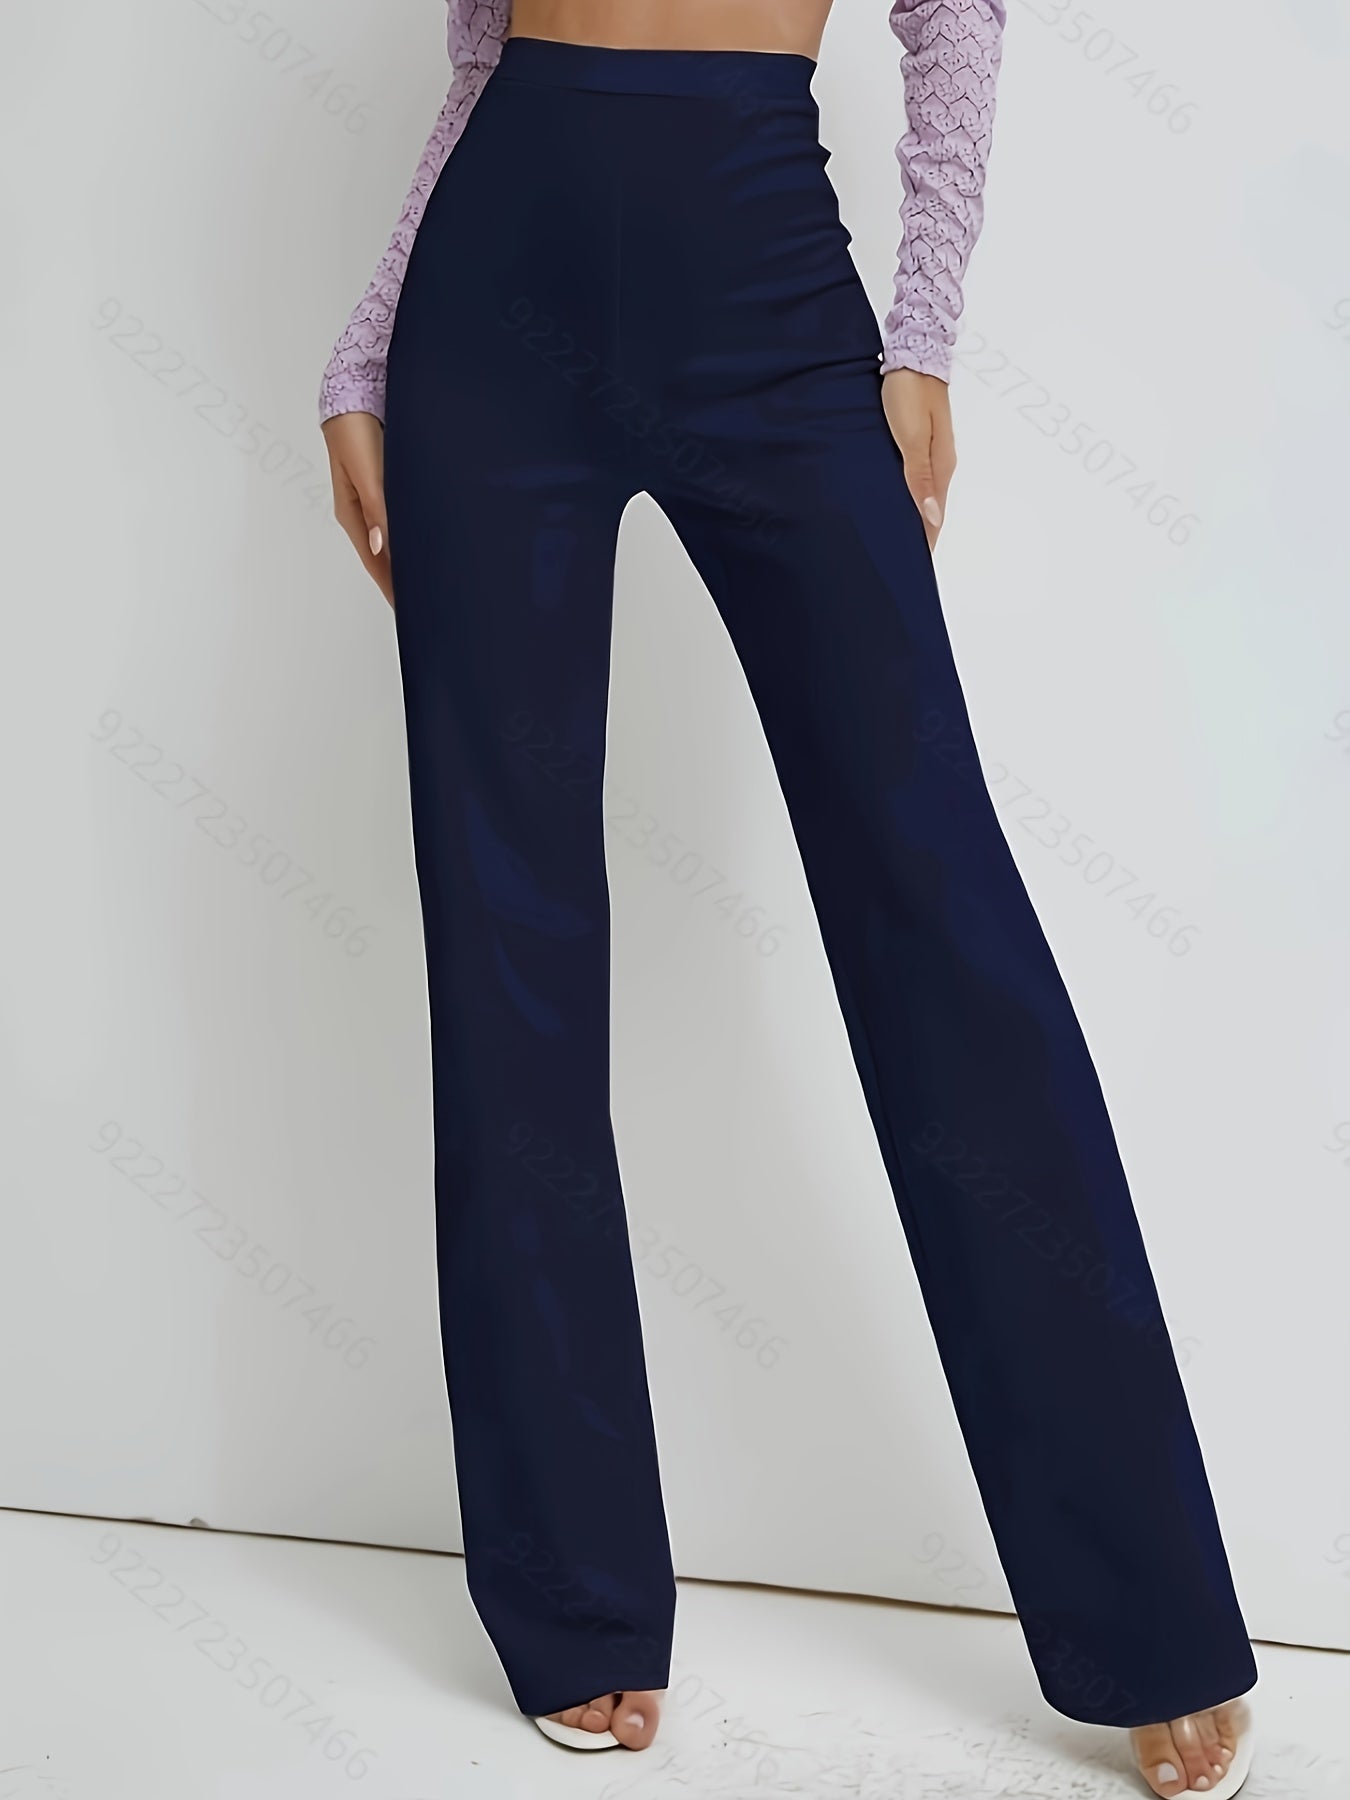 Antmvs Solid Straight Leg Pants, Casual High Waist Work Pants, Women's Clothing